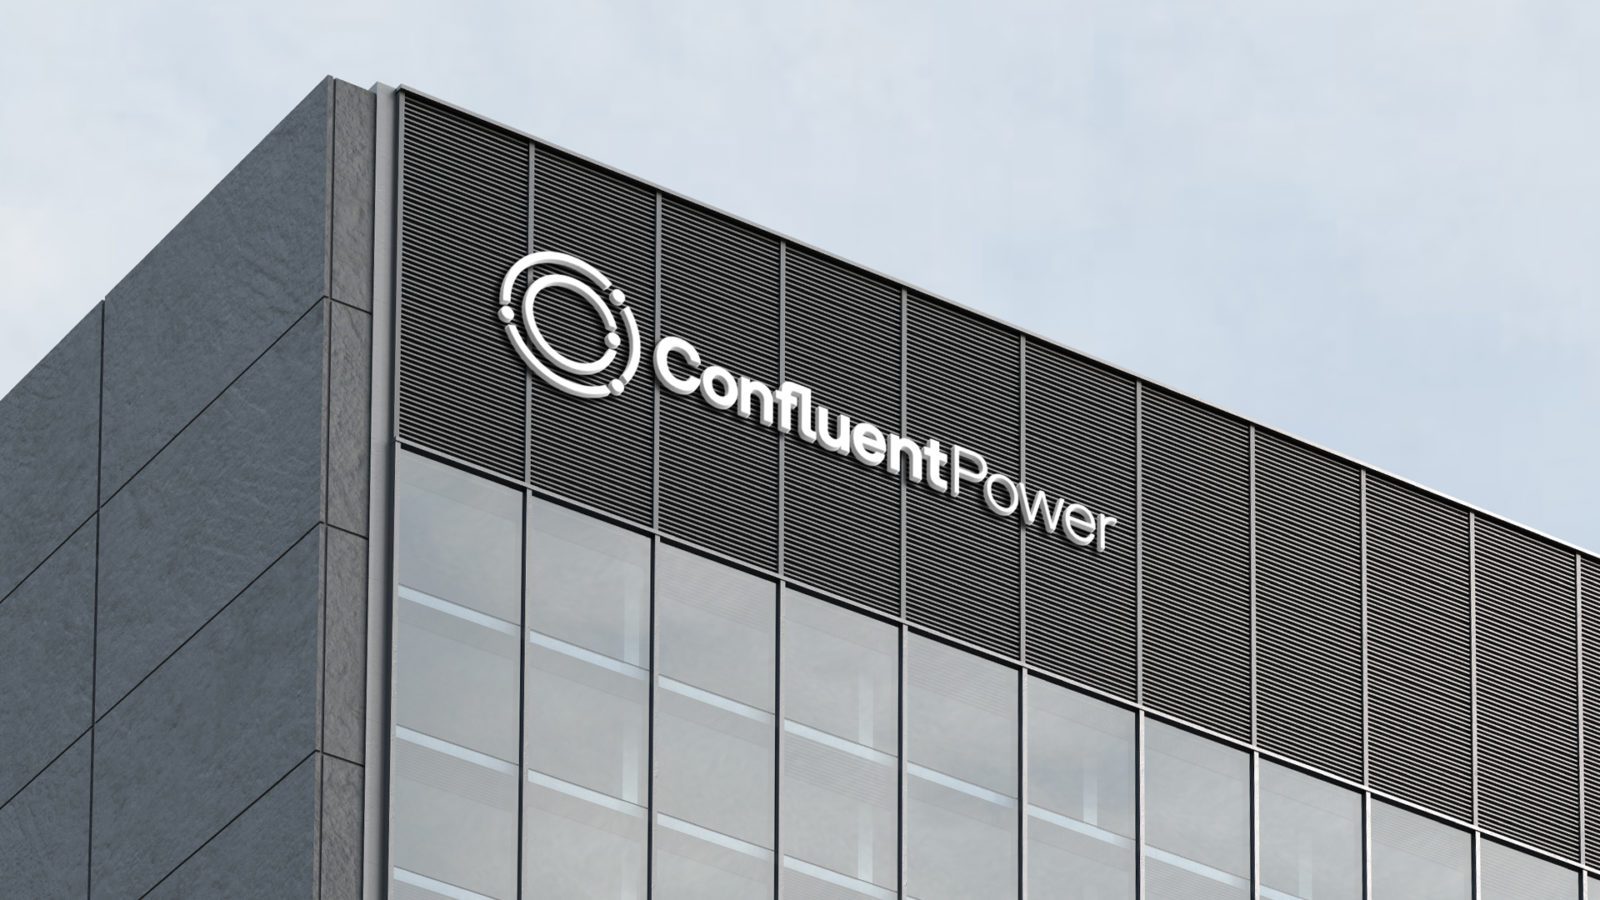 Confluent Power Impact Brand Building Logo Signage